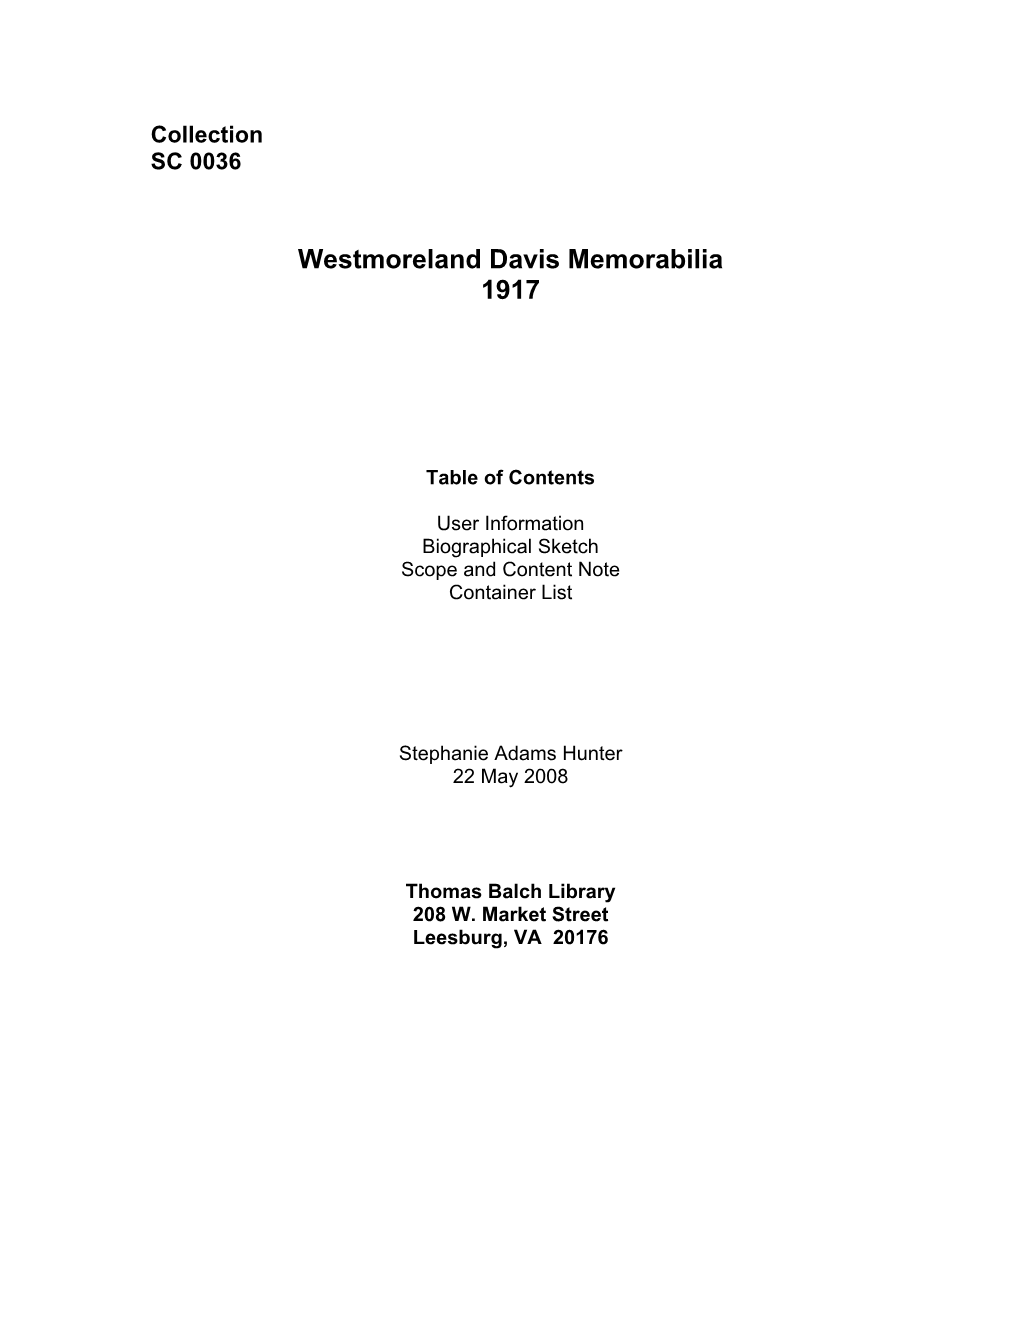 Westmoreland Davis Memorabilia SC 0036